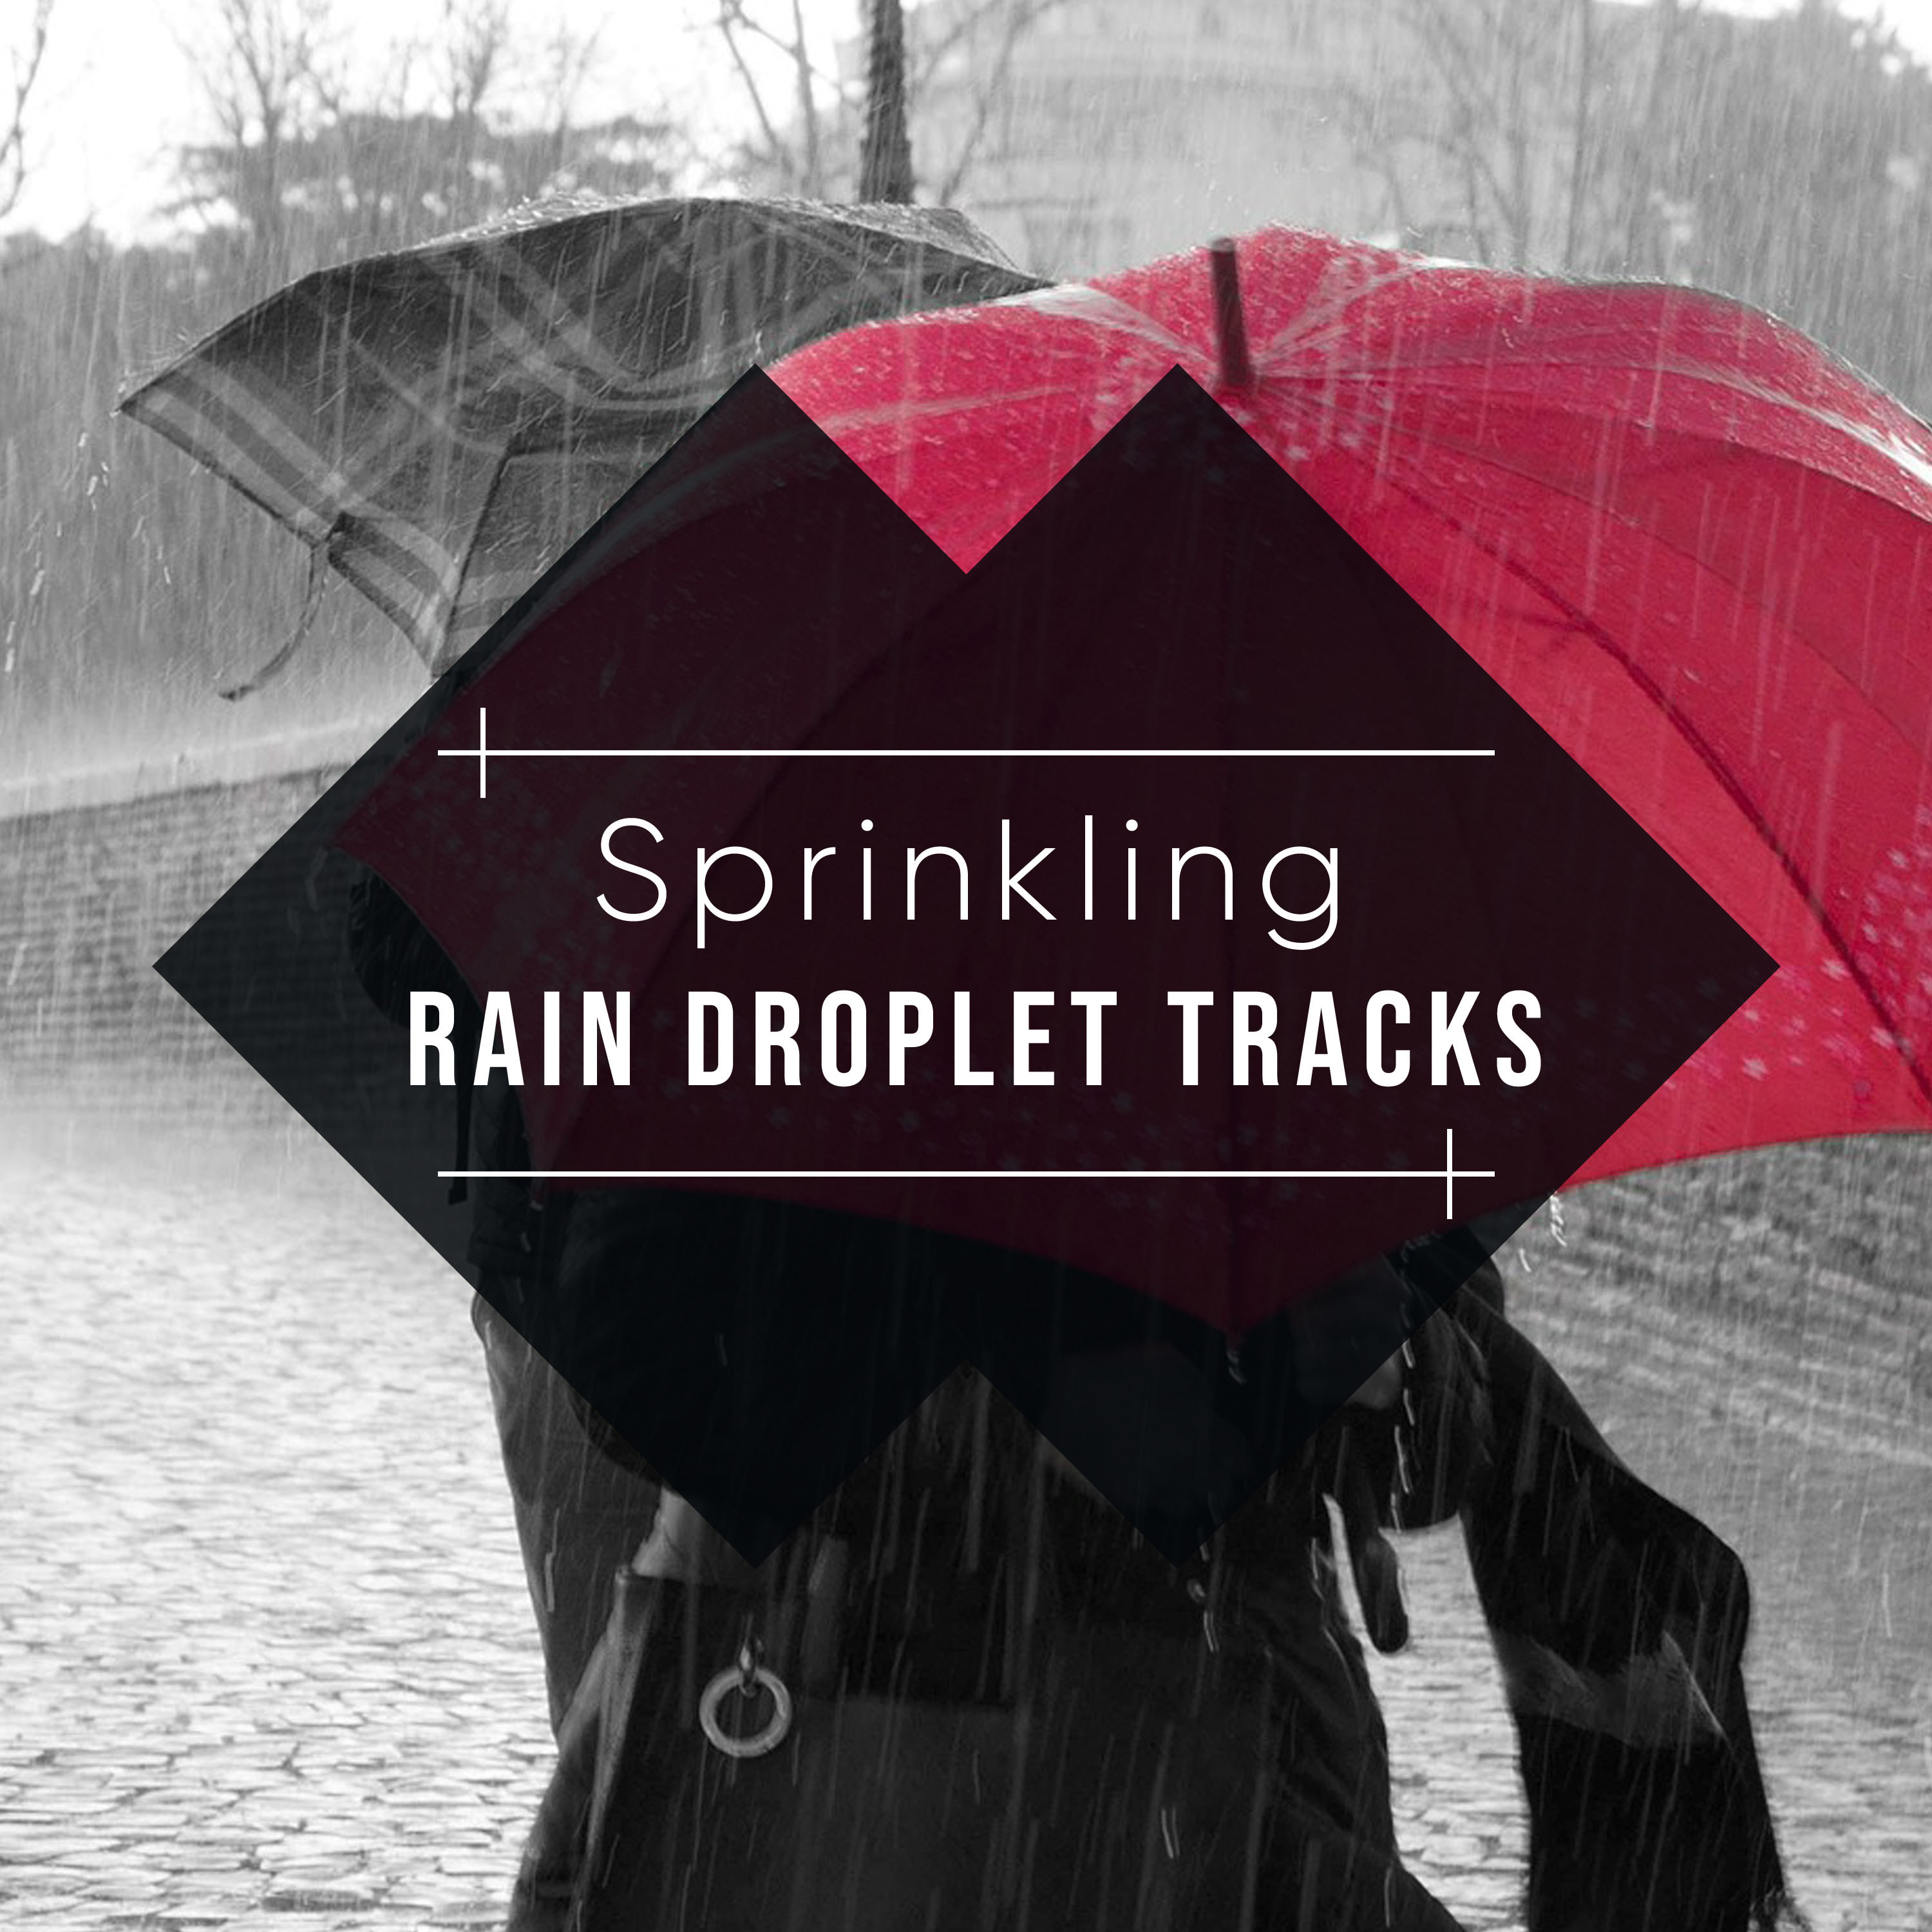 #15 Sprinkling Rain Droplet Tracks